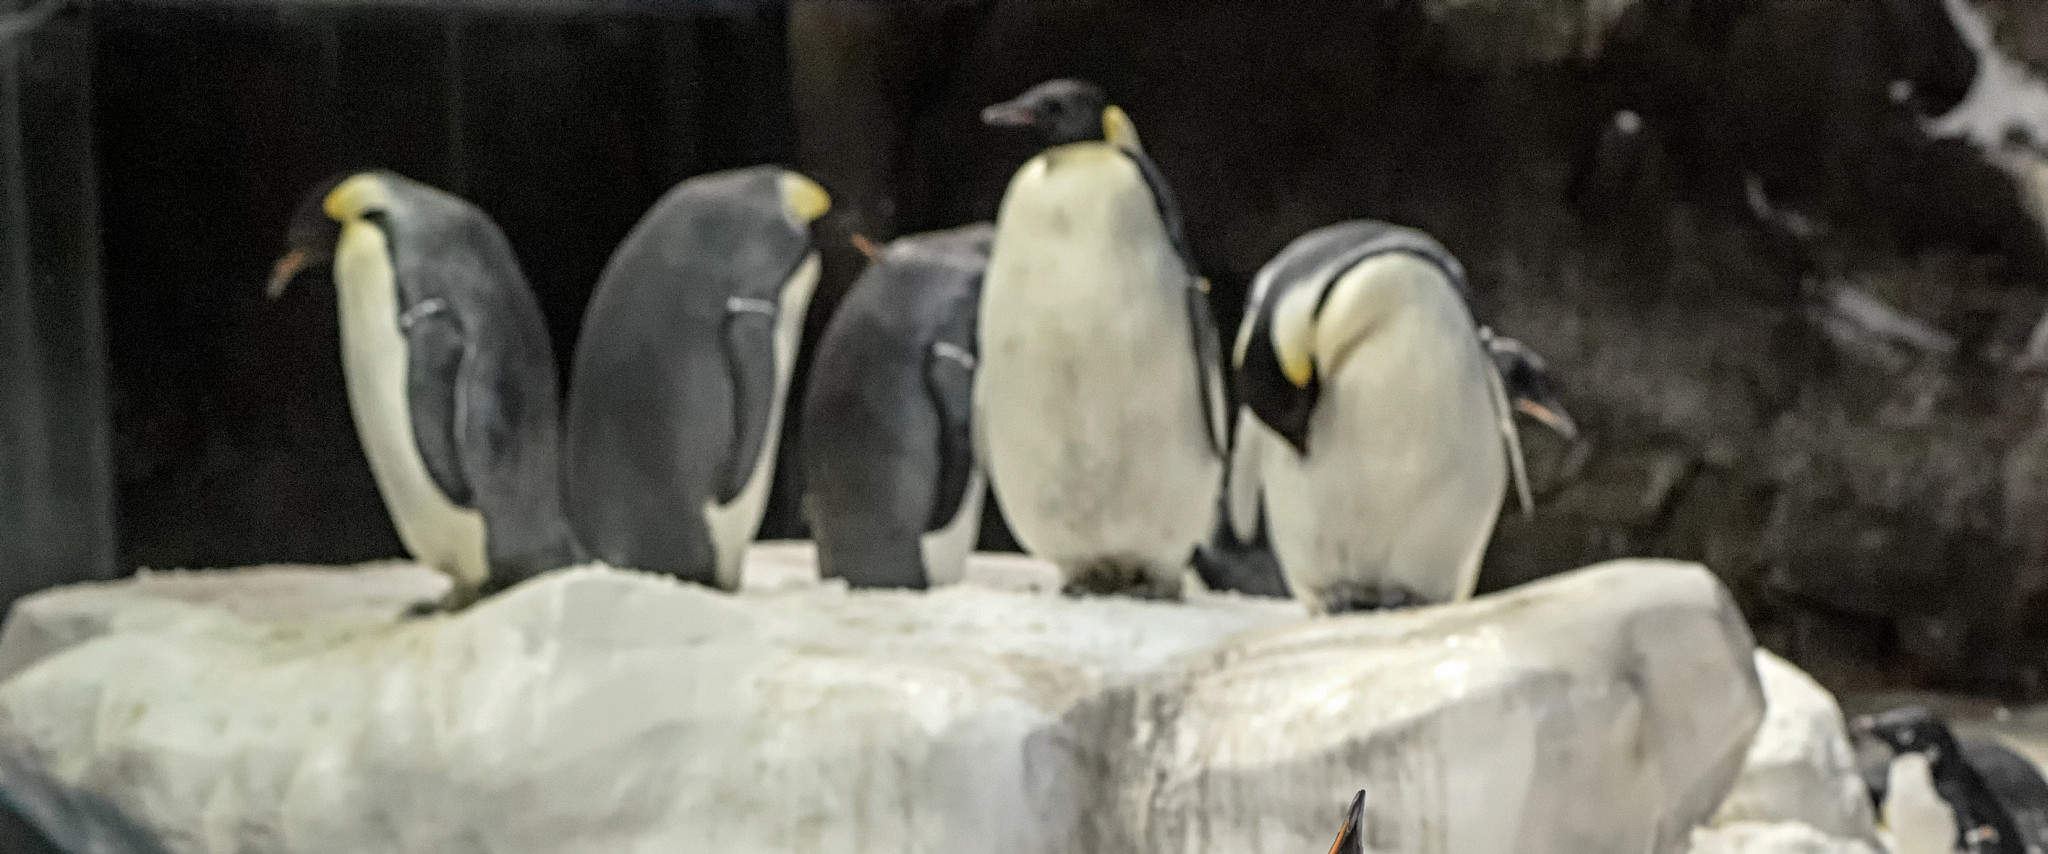 Penguins standing